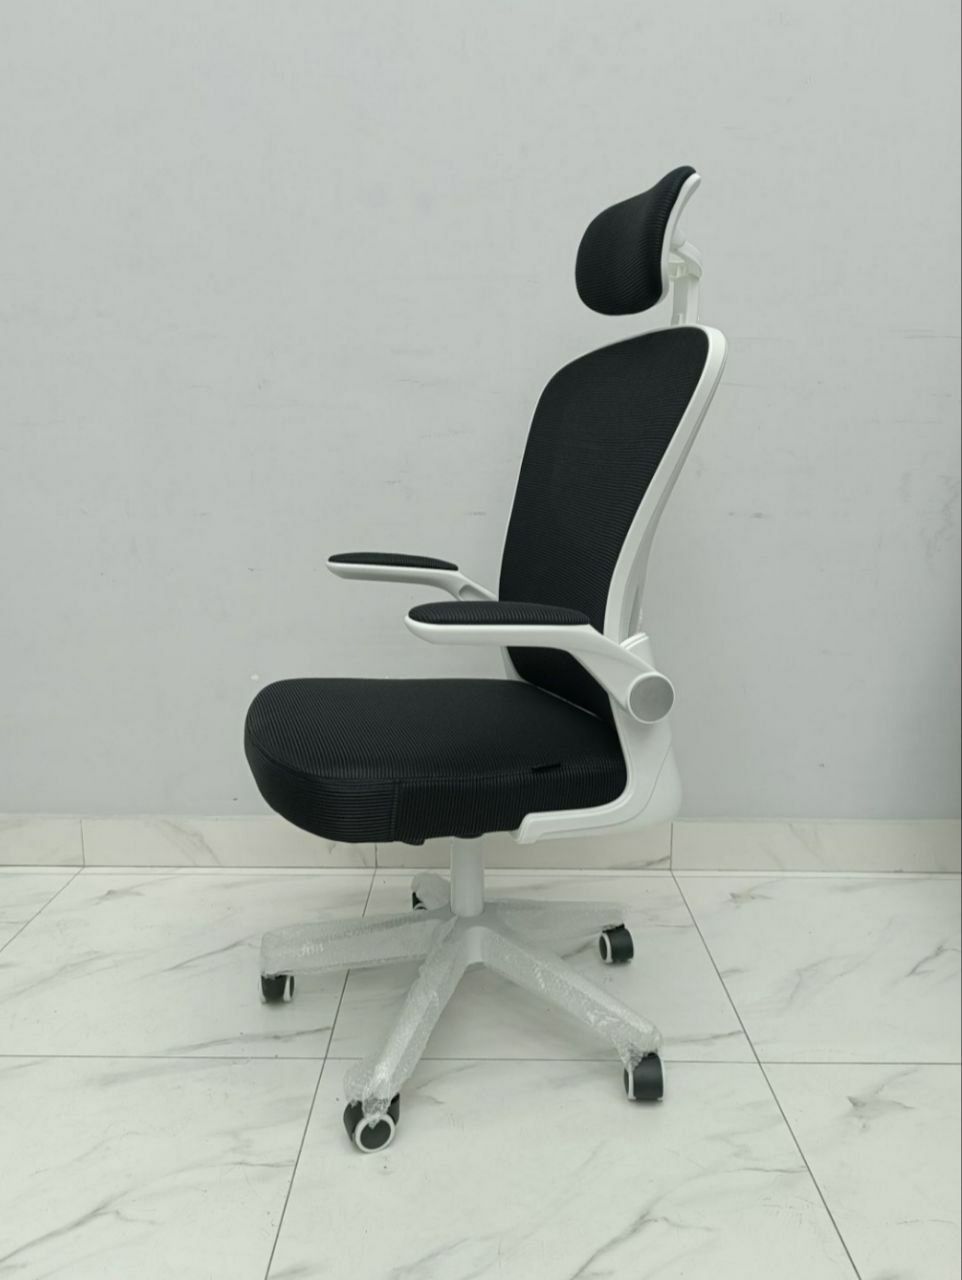 Кресло 7801 white, black,aqua со склада. Есть доставка